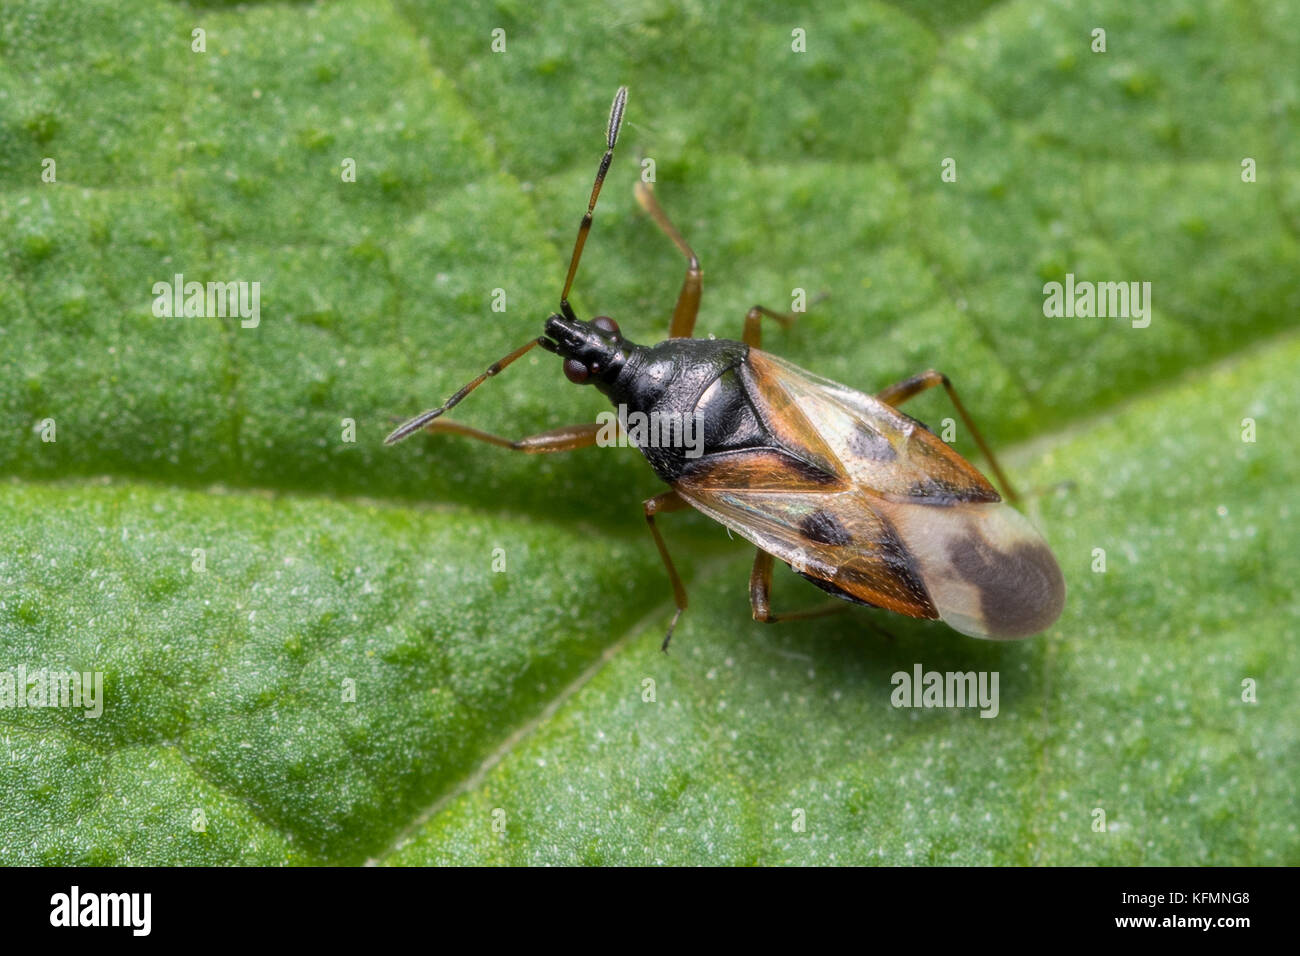 Blume Bug (Anthocoris nemorum) ruht auf Blatt. Tipperary, Irland Stockfoto